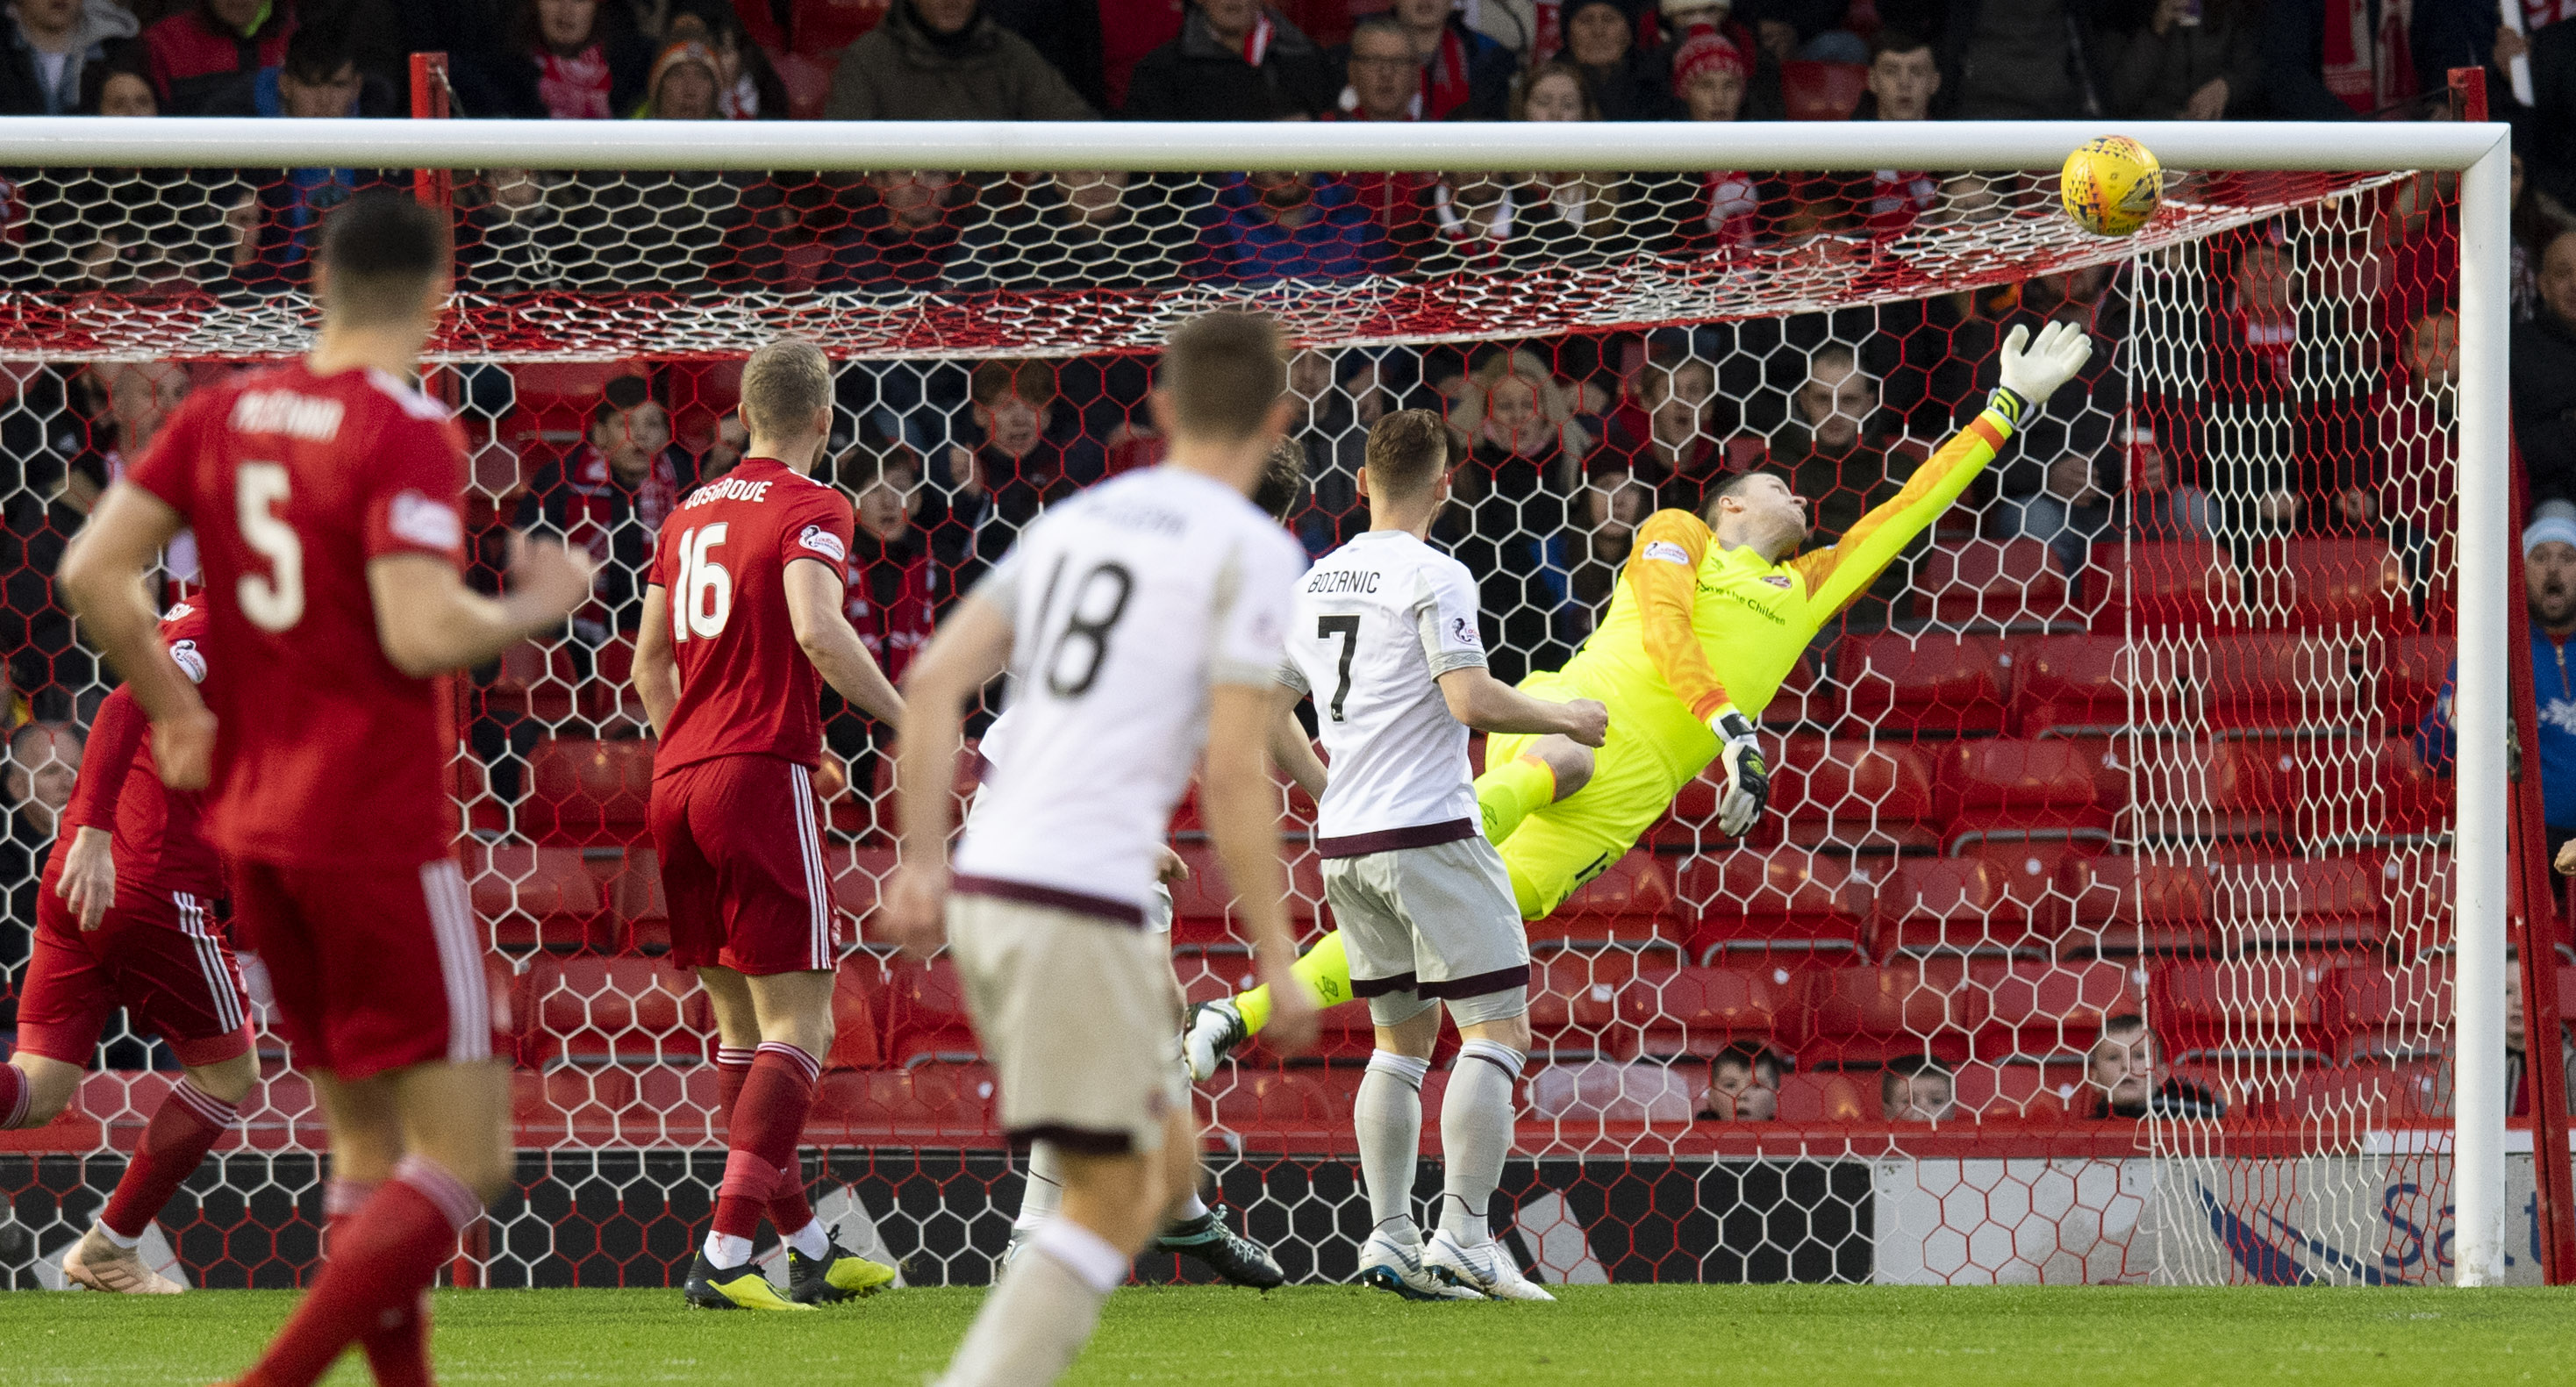 Aberdeen striker Sam Cosgrove scores past Hearts goalkeeper Colin Doyle to make it 1-0.